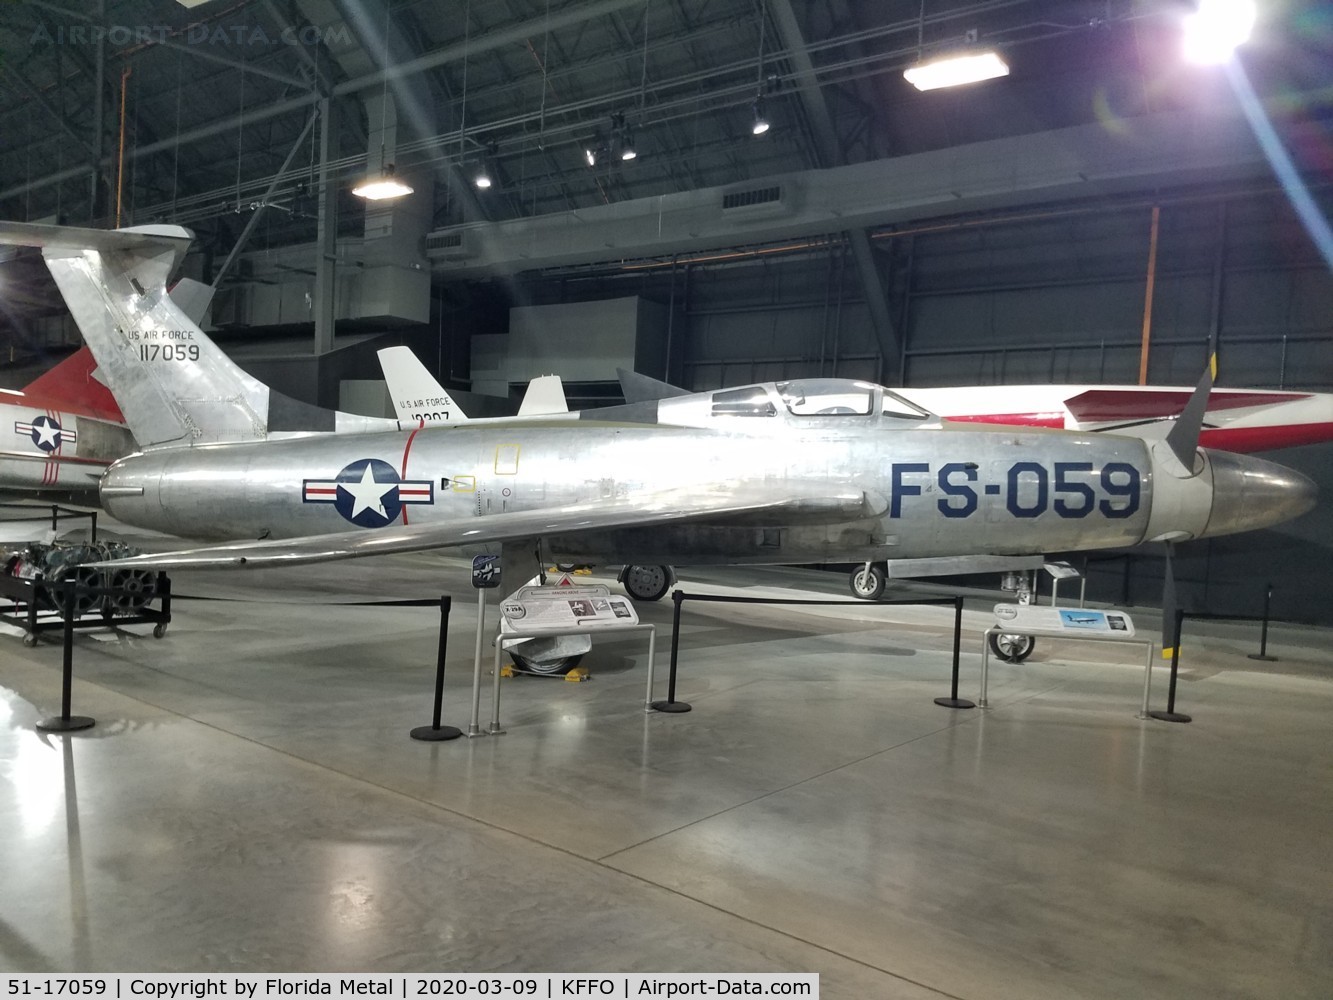 51-17059, 1955 Republic XF-84H Thunderstreak C/N 369, F-84H zx